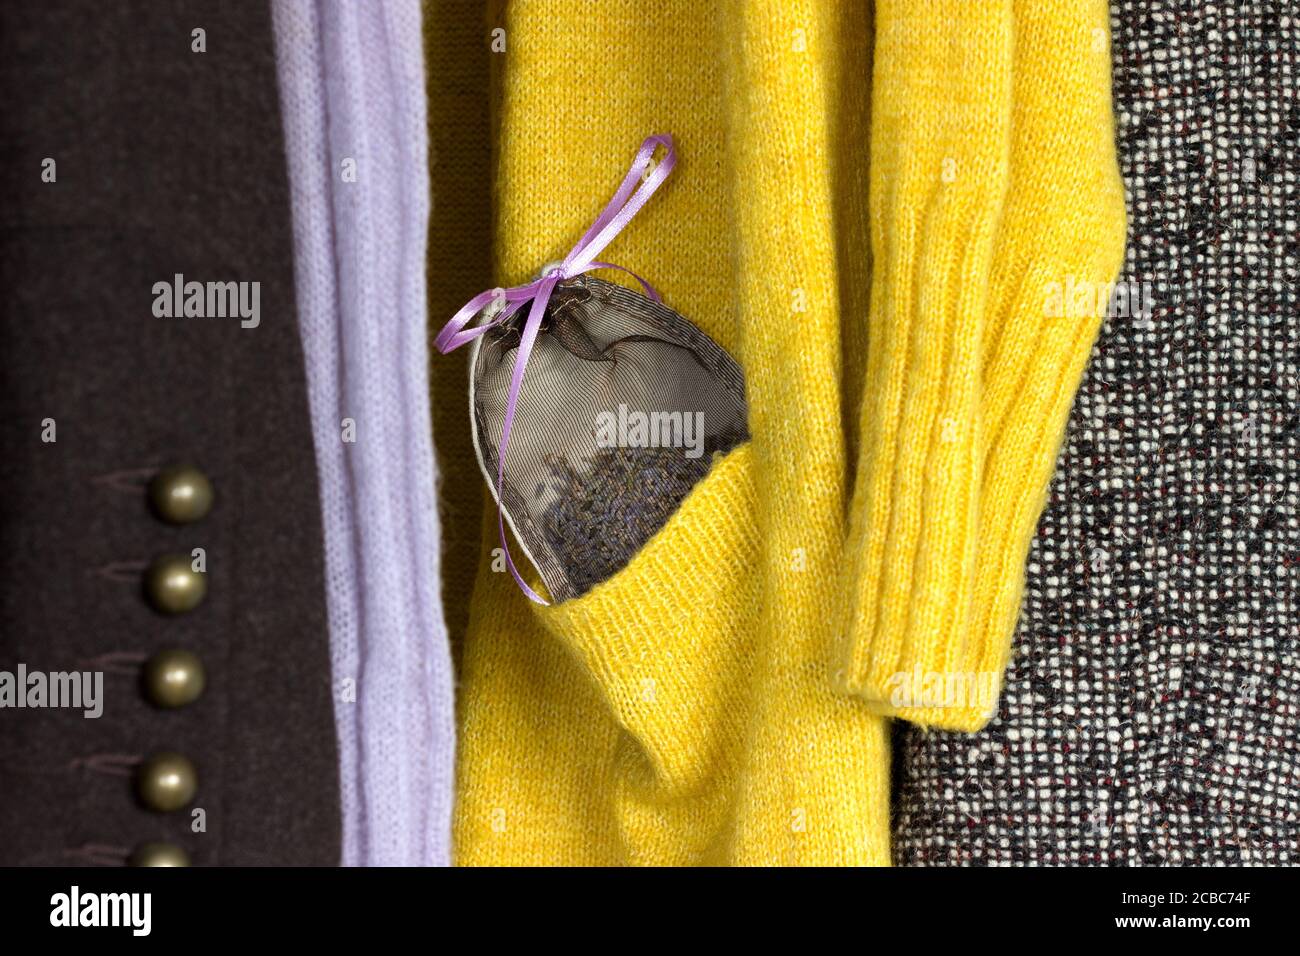 https://c8.alamy.com/comp/2CBC74F/lavender-sachet-in-a-woolen-jacket-pocket-in-a-closet-moth-repellent-2CBC74F.jpg